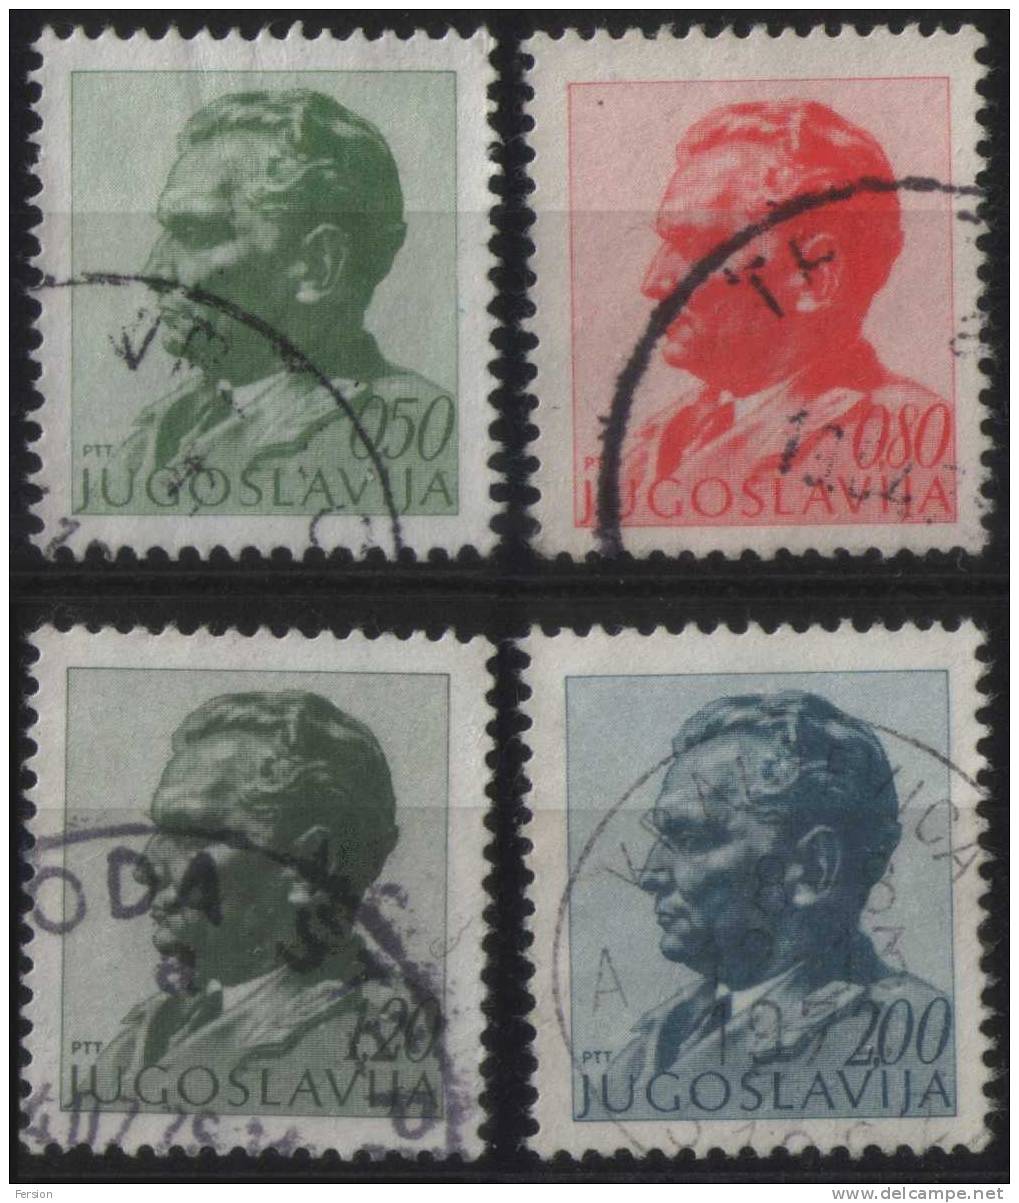 1974 - Yugoslavia - Definitive Stamps - TITO - Mi. 1551-1554 - Used Stamps